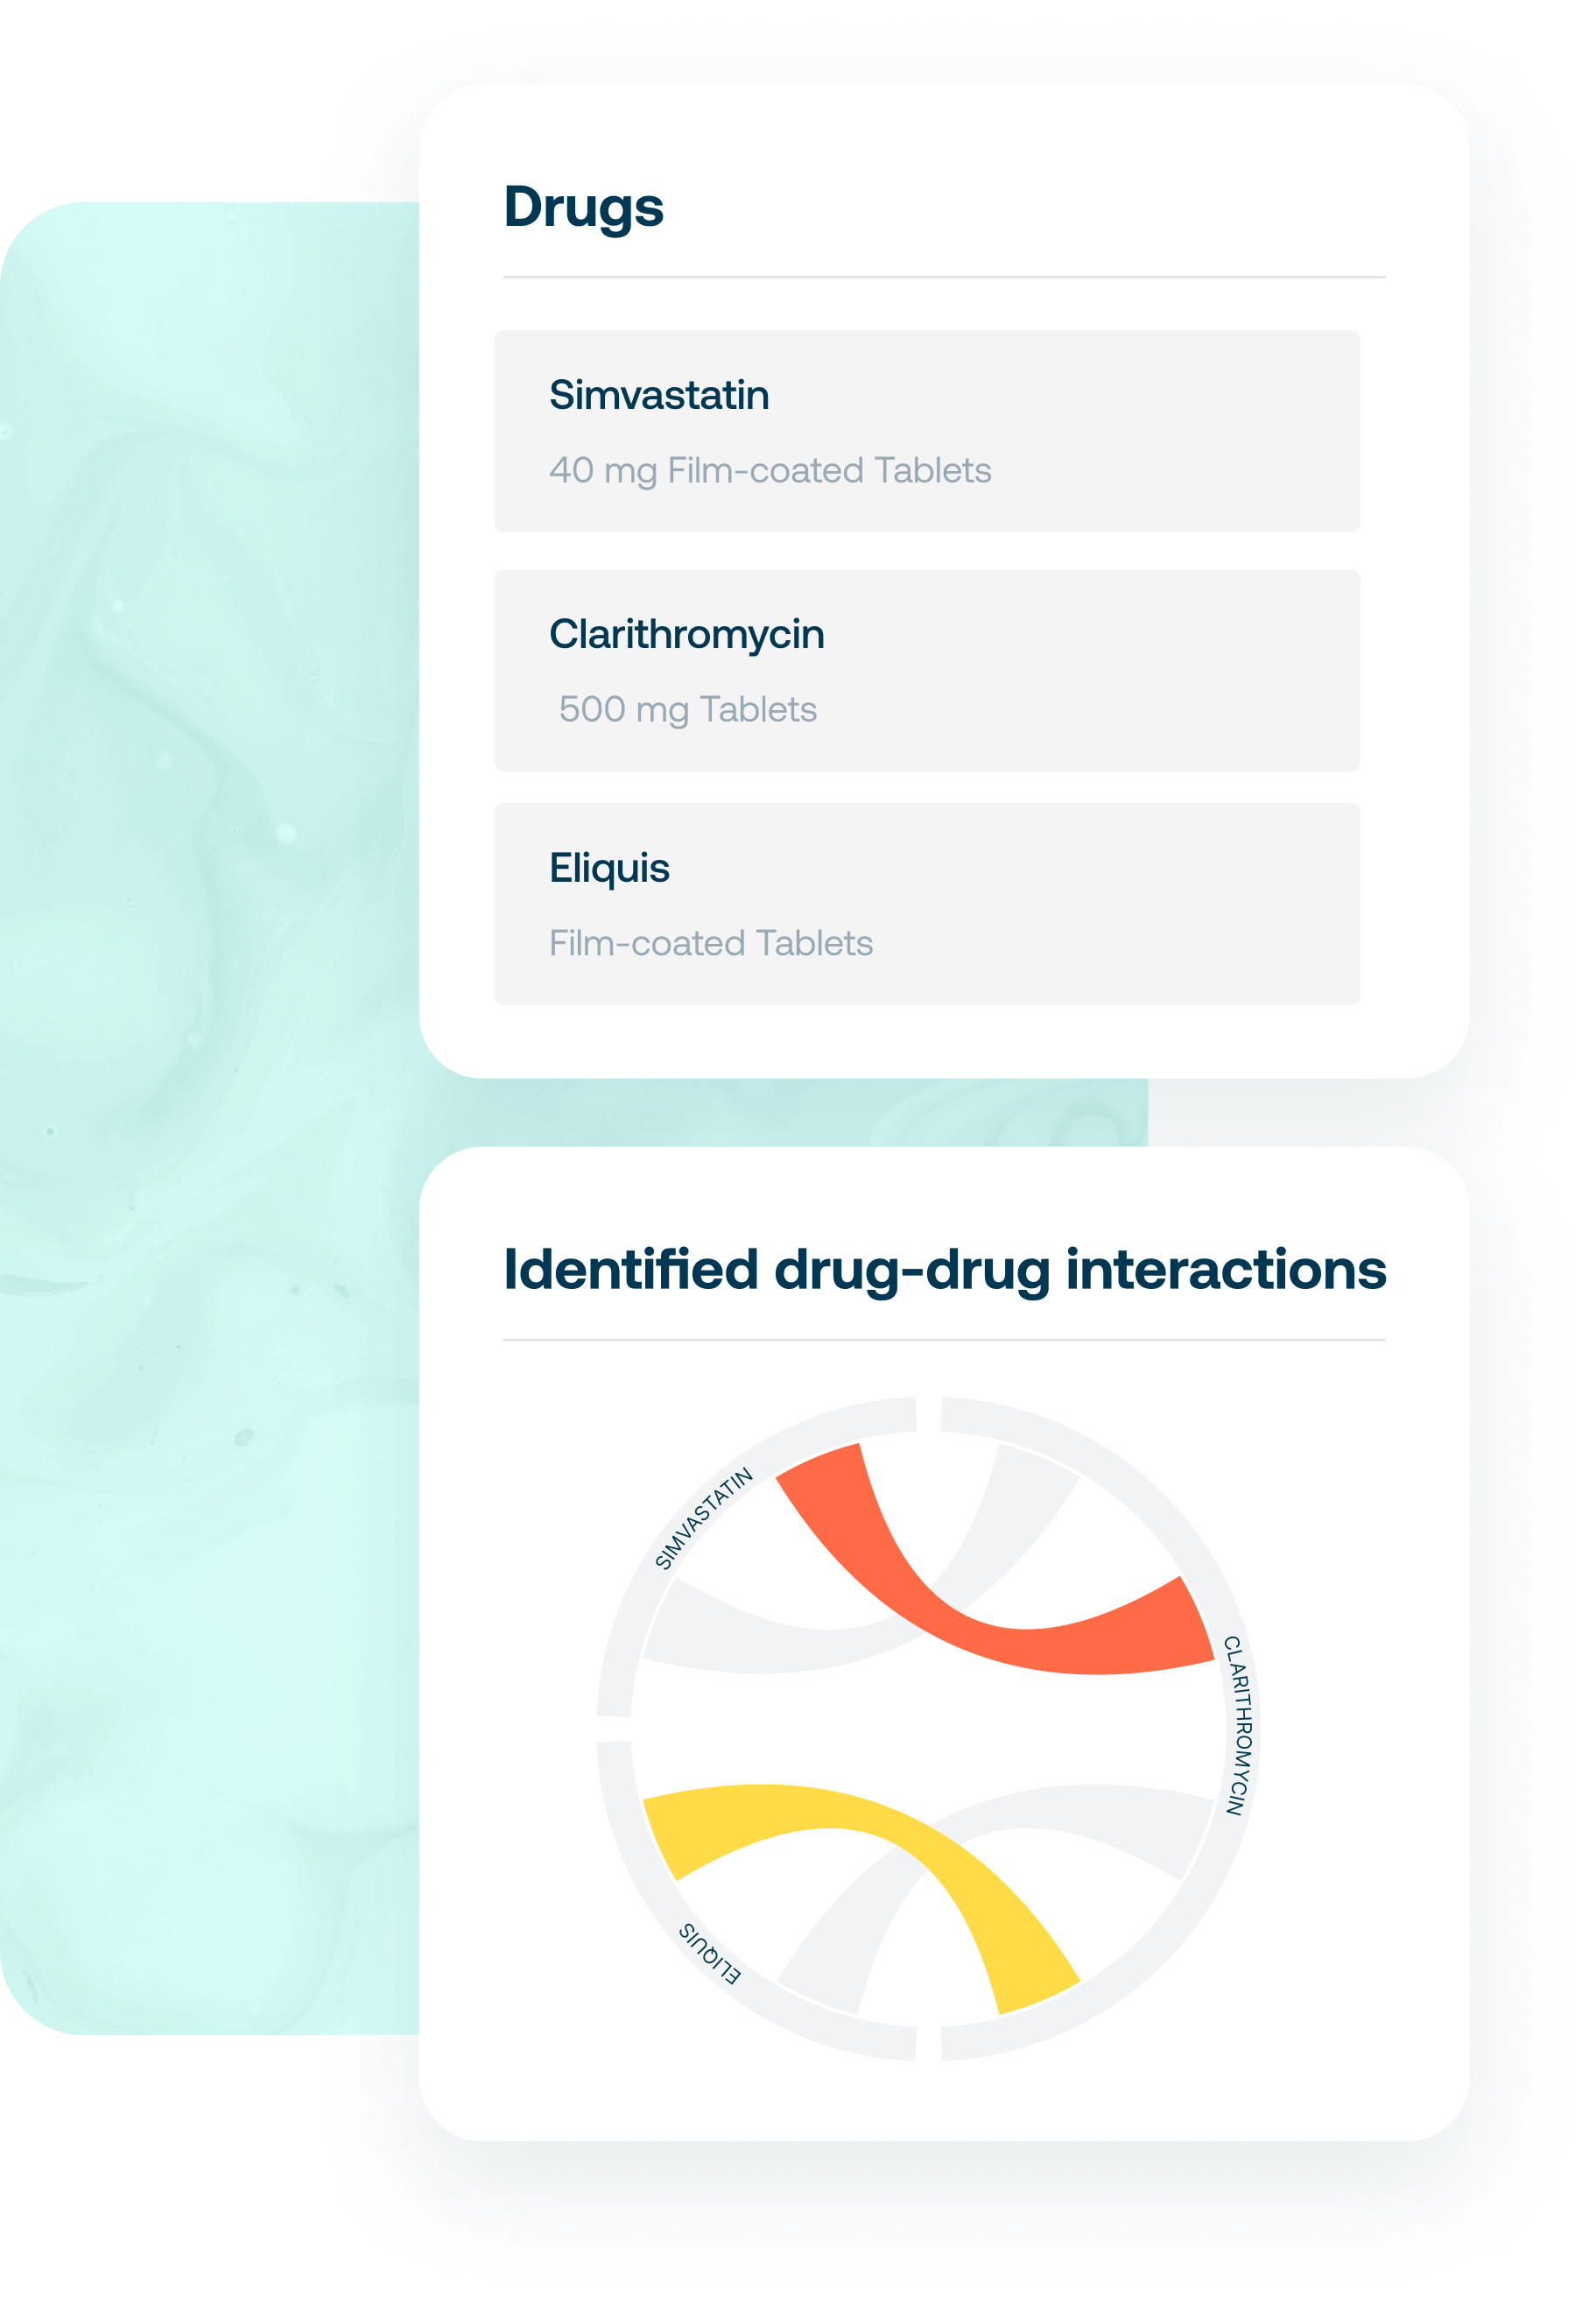 Comprehensive drug interactions overview